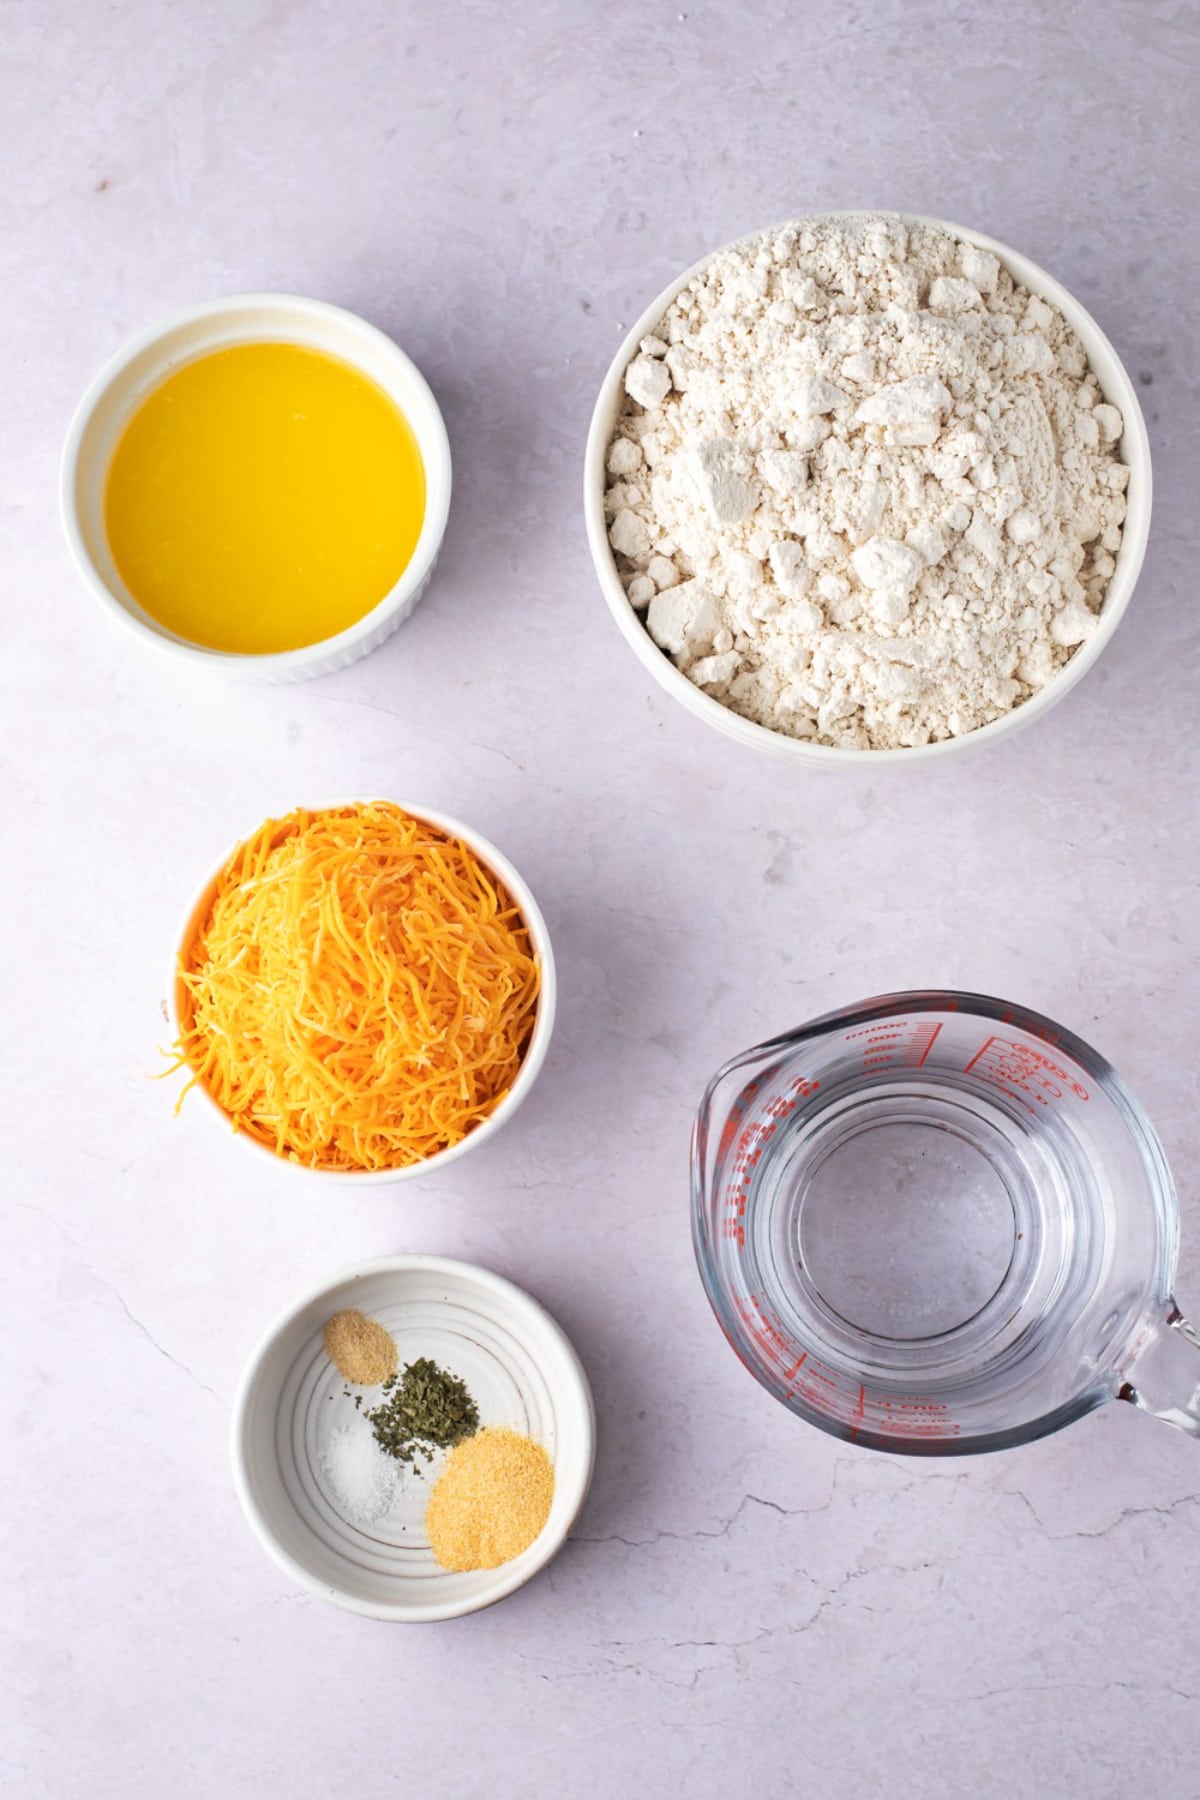 Cheddar Bay Biscuits Ingredients - Baking Mix, Cheddar Cheese, Water, Butter, Garlic Powder, Salt, Onion Powder and Dried Parsley
